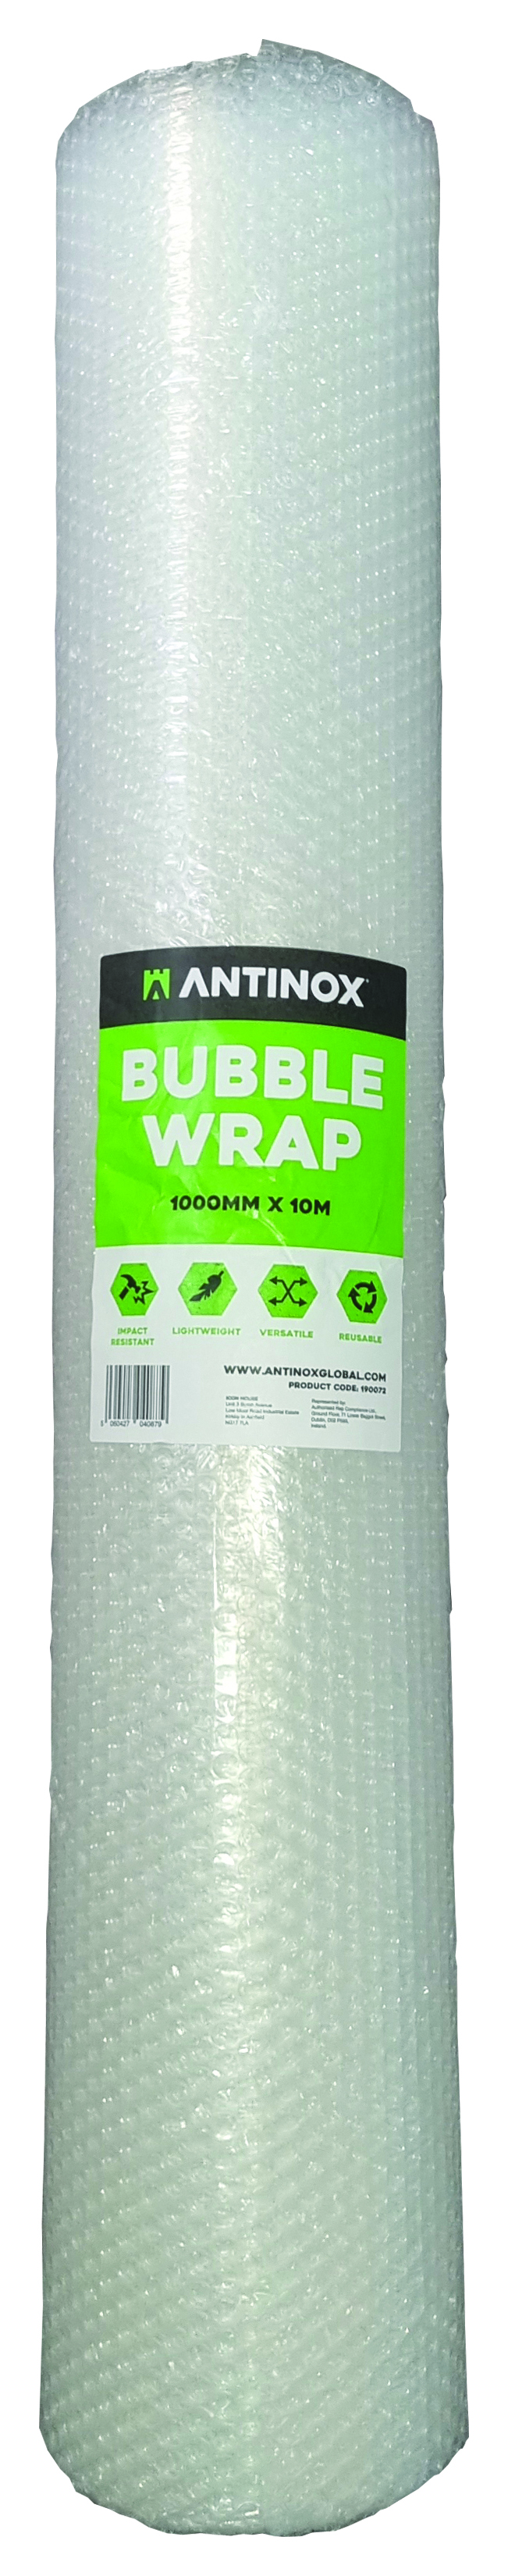 Antinox Bubble Wrap - 1 x 10m